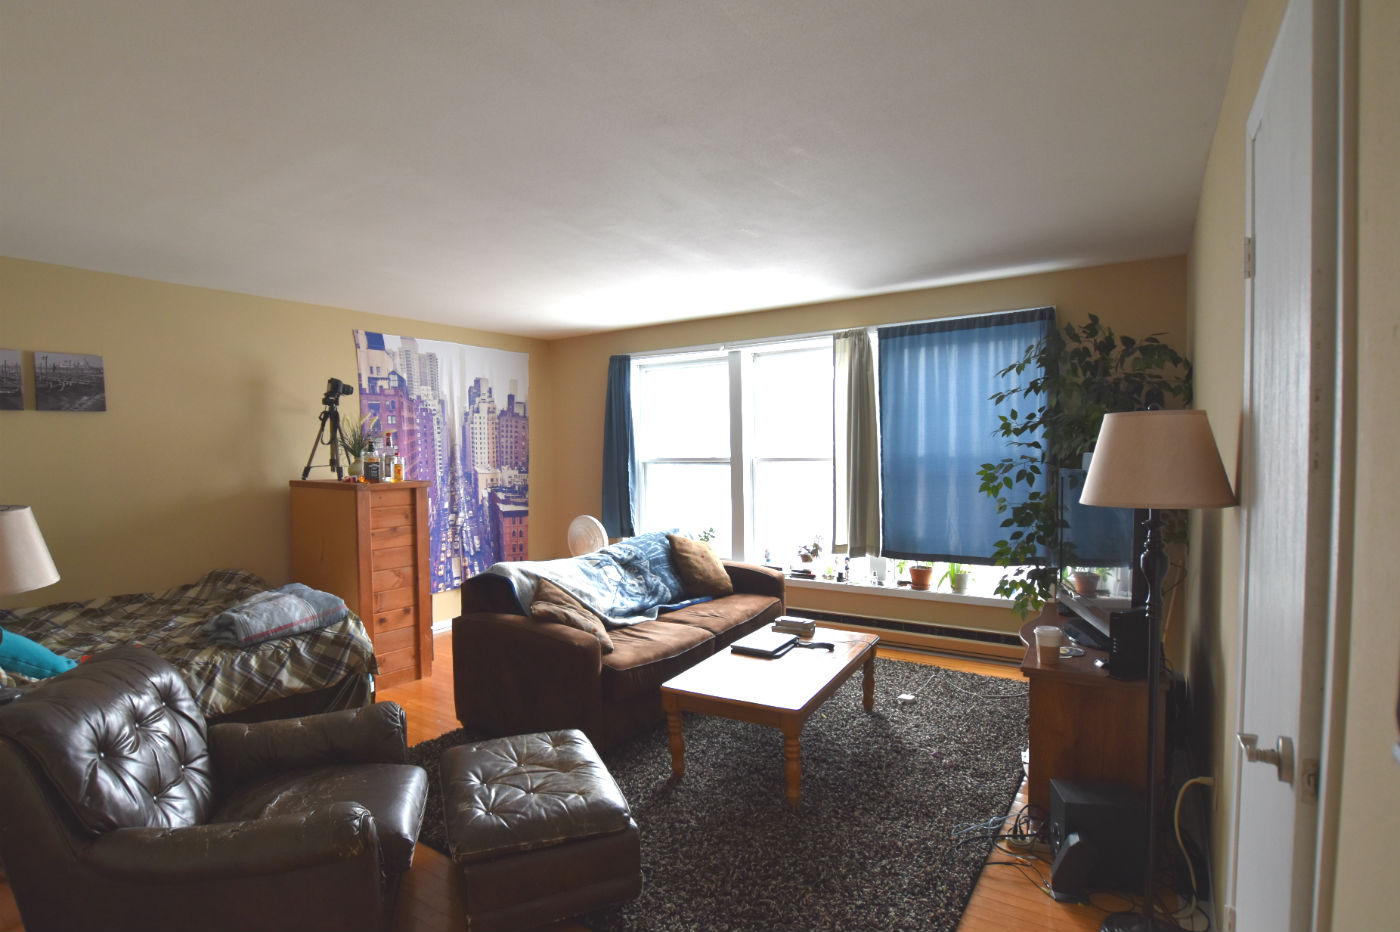 Downtown Oshkosh apartment - 422 A N. Main living room